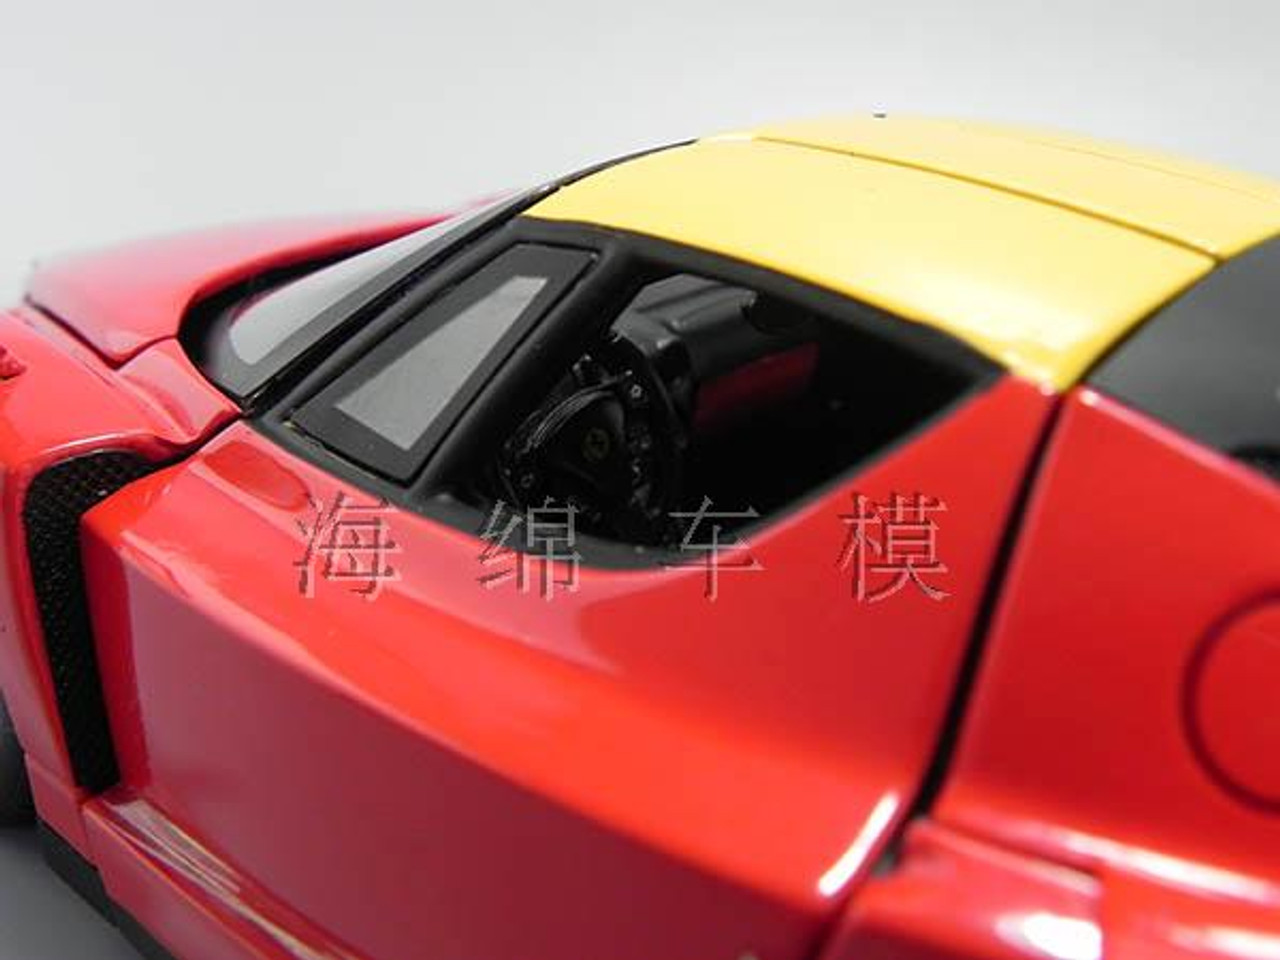 1/18 Hot Wheels Hotwheels Elite Ferrari Enzo F60 (Red) Diecast Model